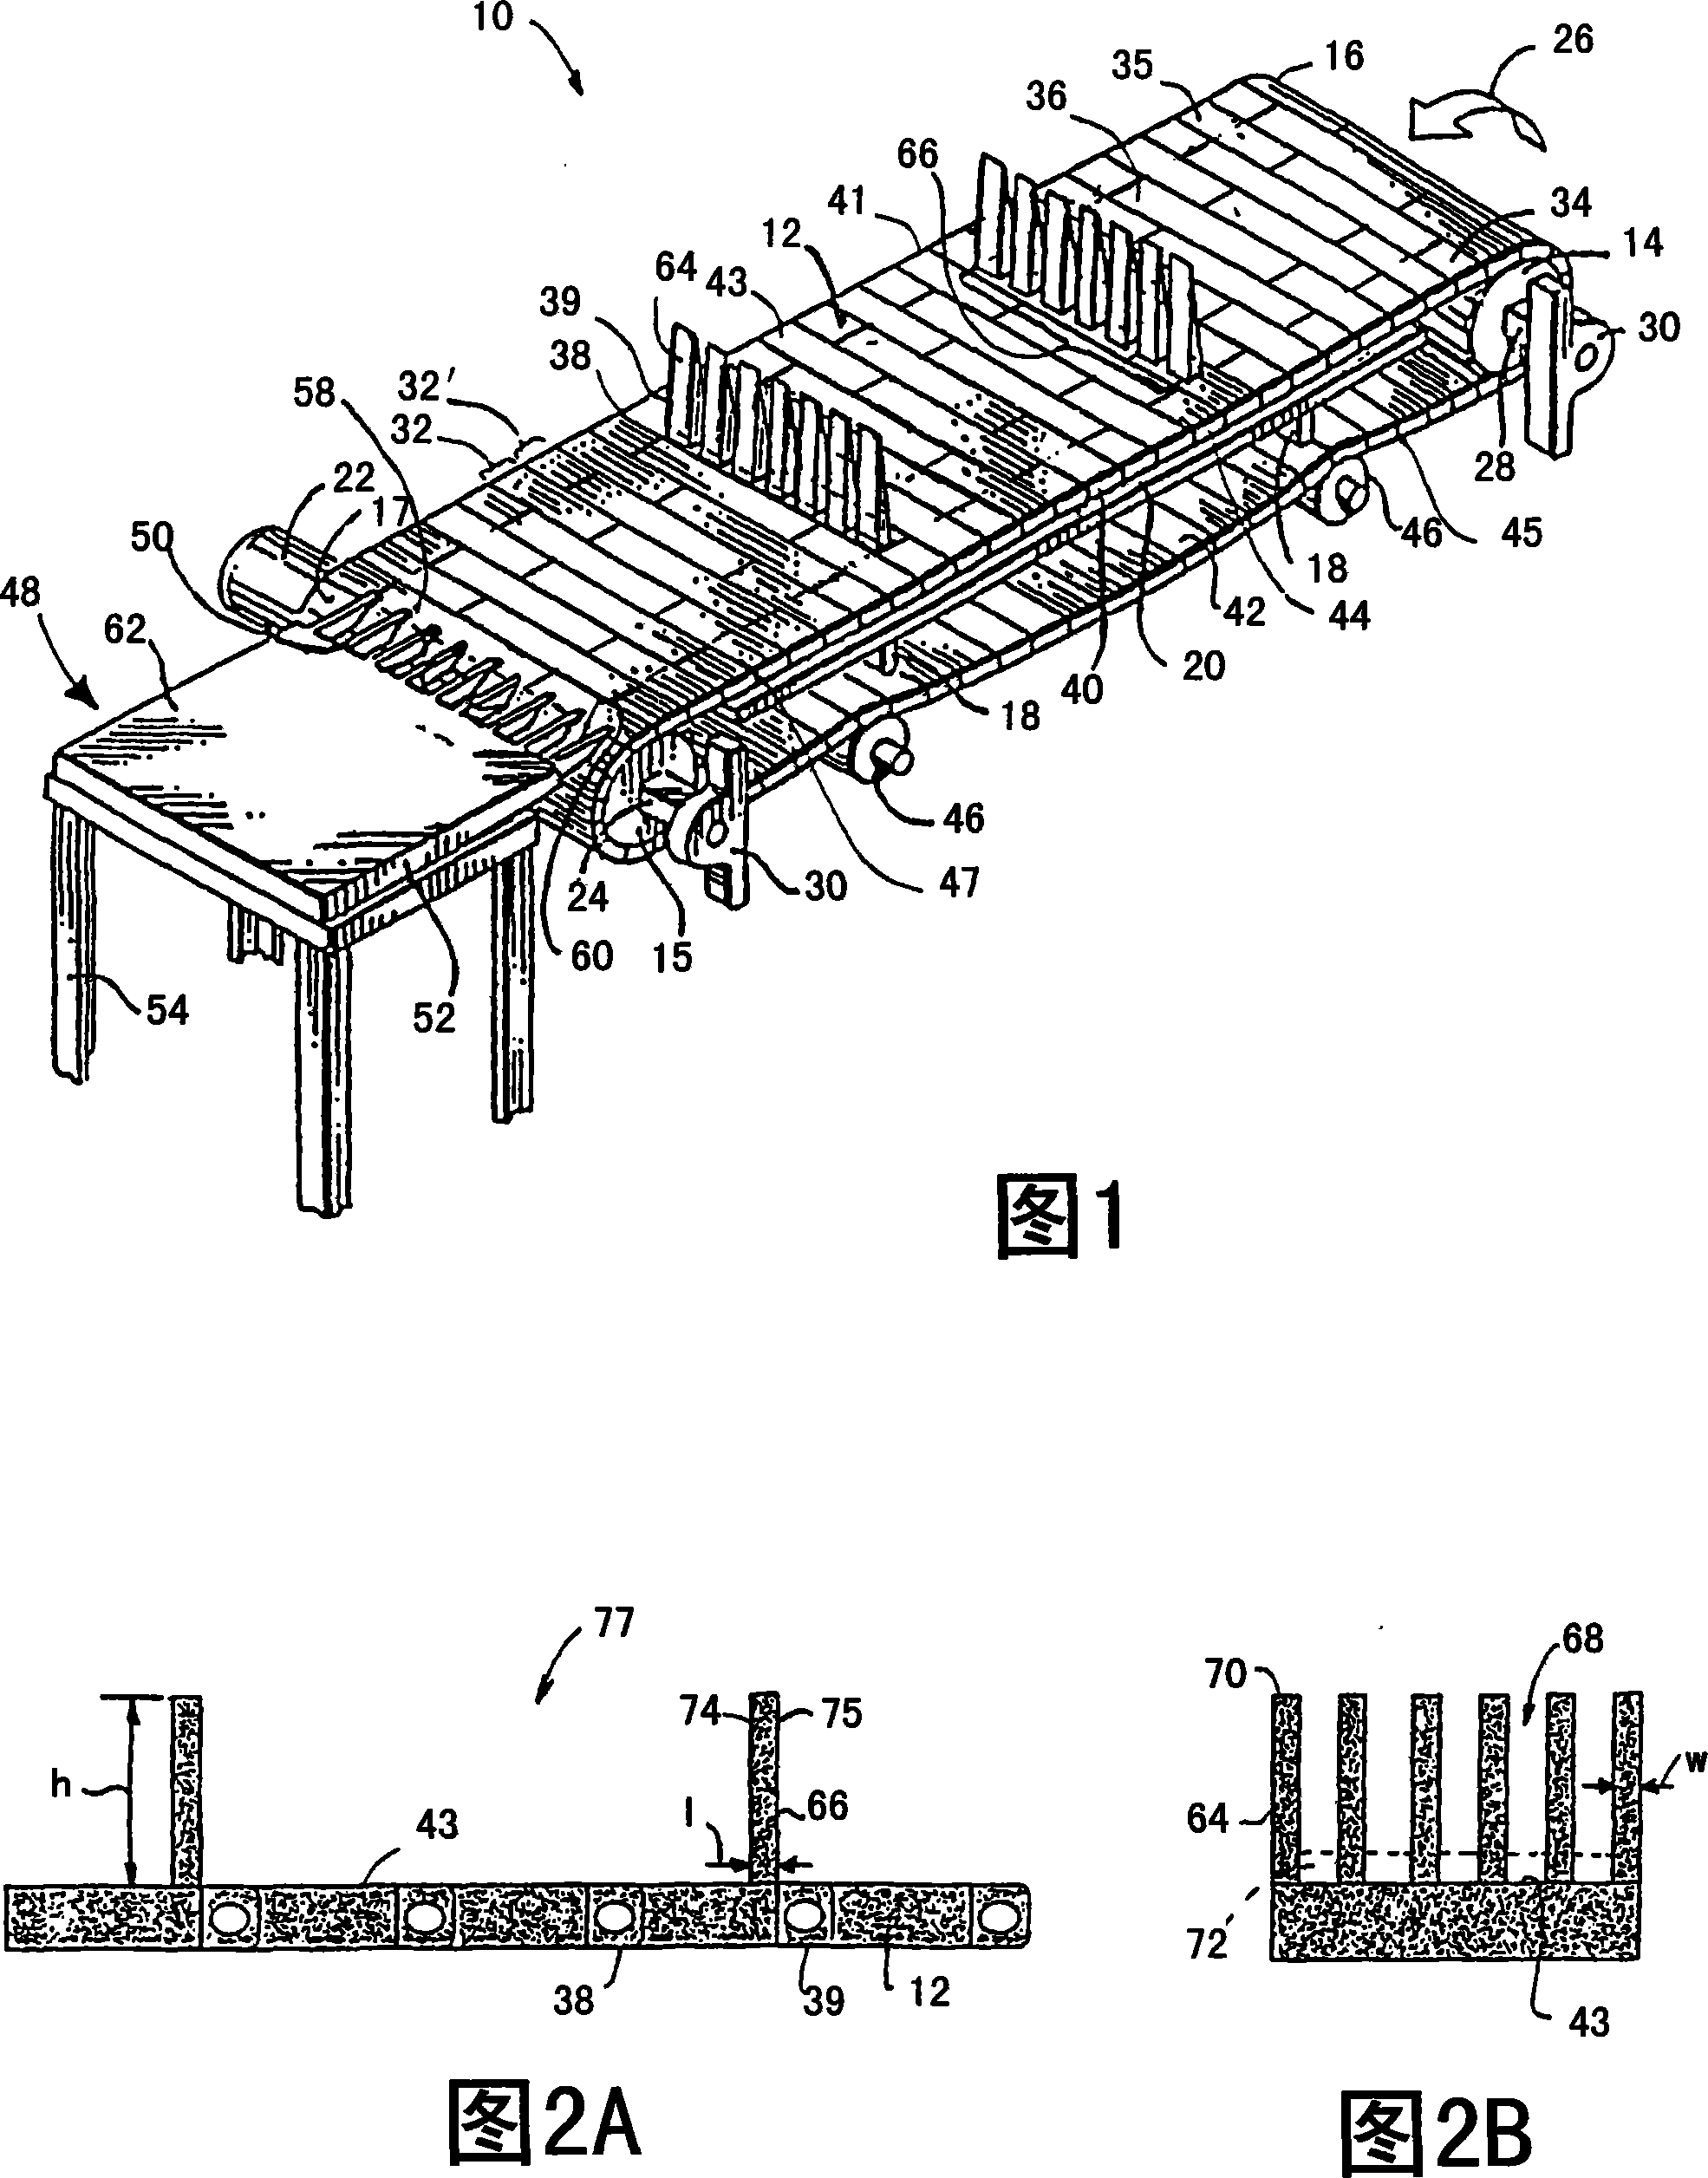 Conveyor having a conveyor belt with flights, including segmented flights for gapless end transfer